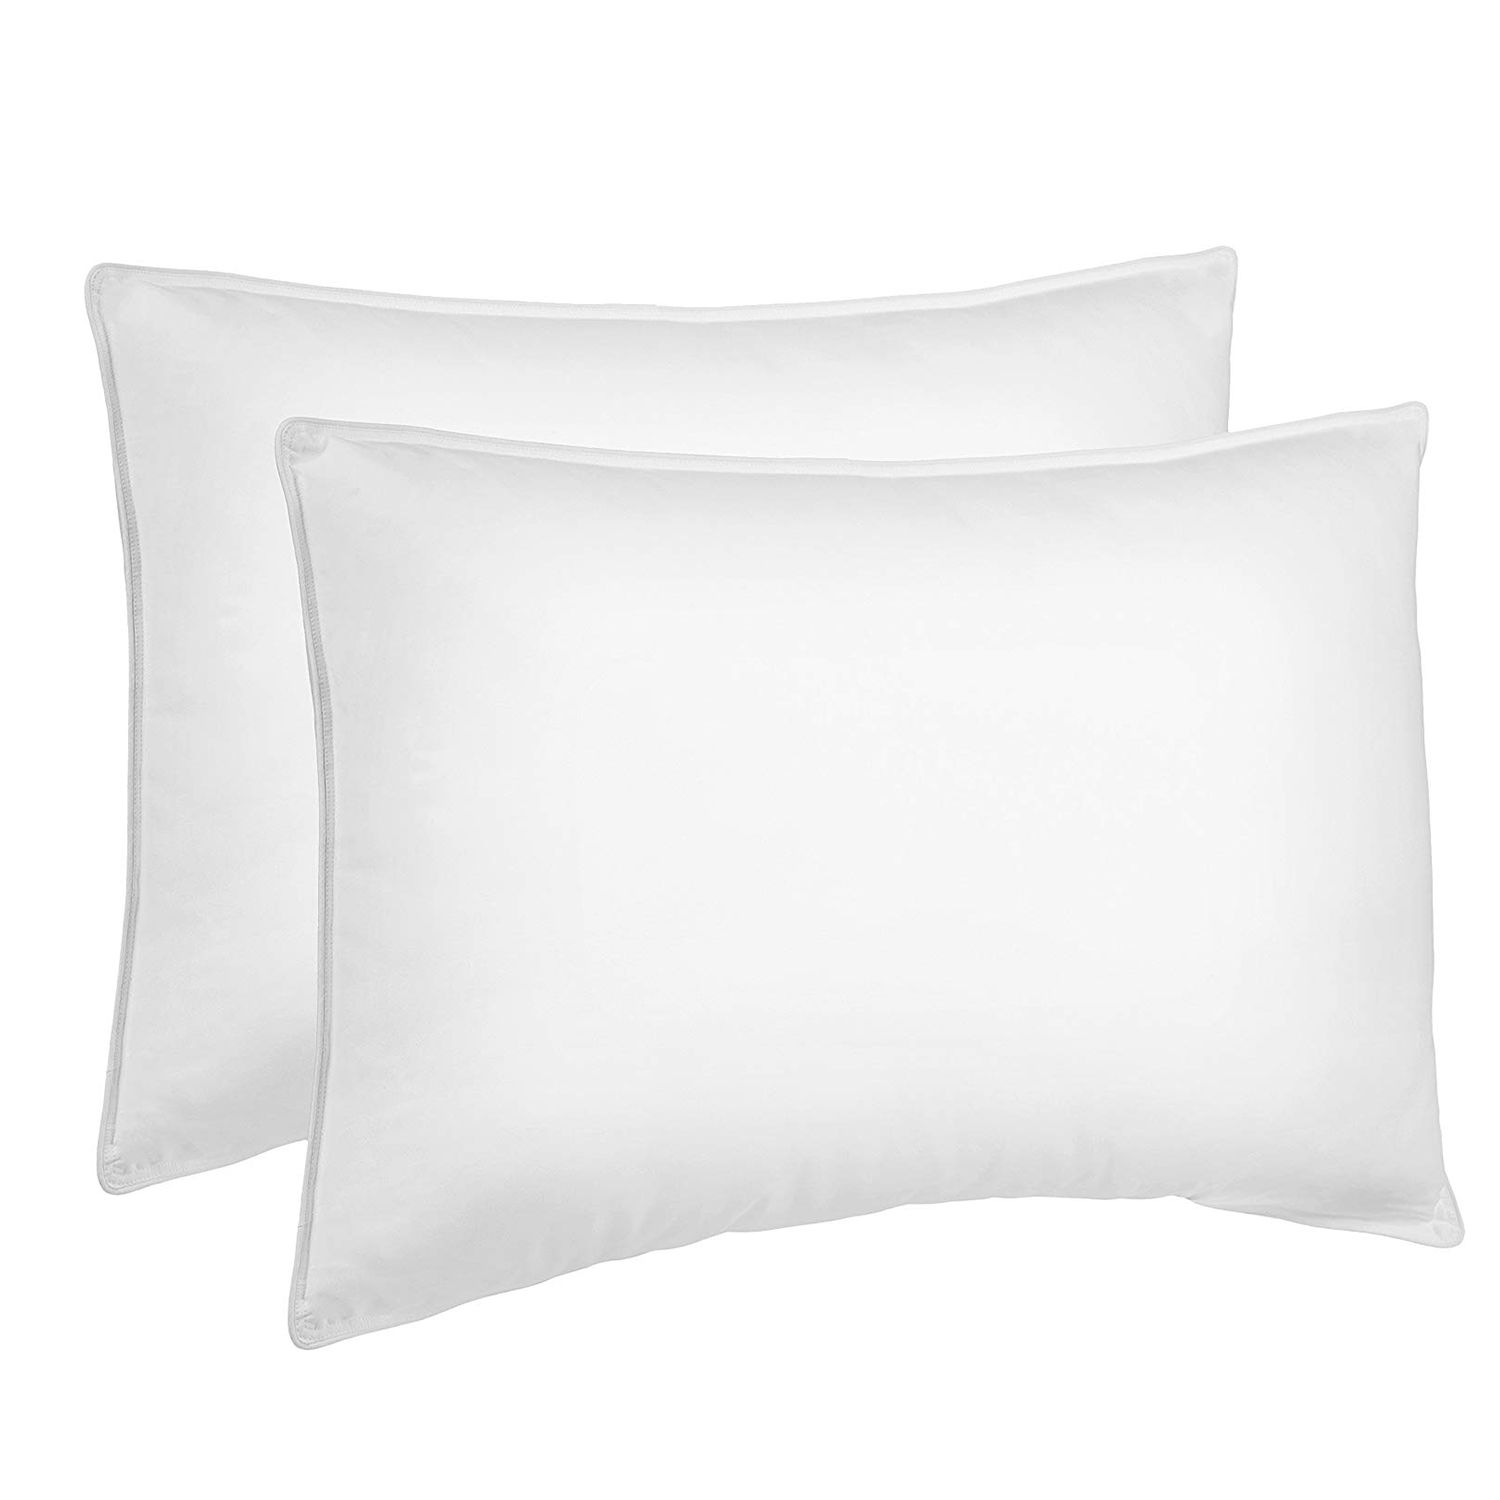 AmazonBasics Down Alternative Bed Pillows Sleepers 2-Pack